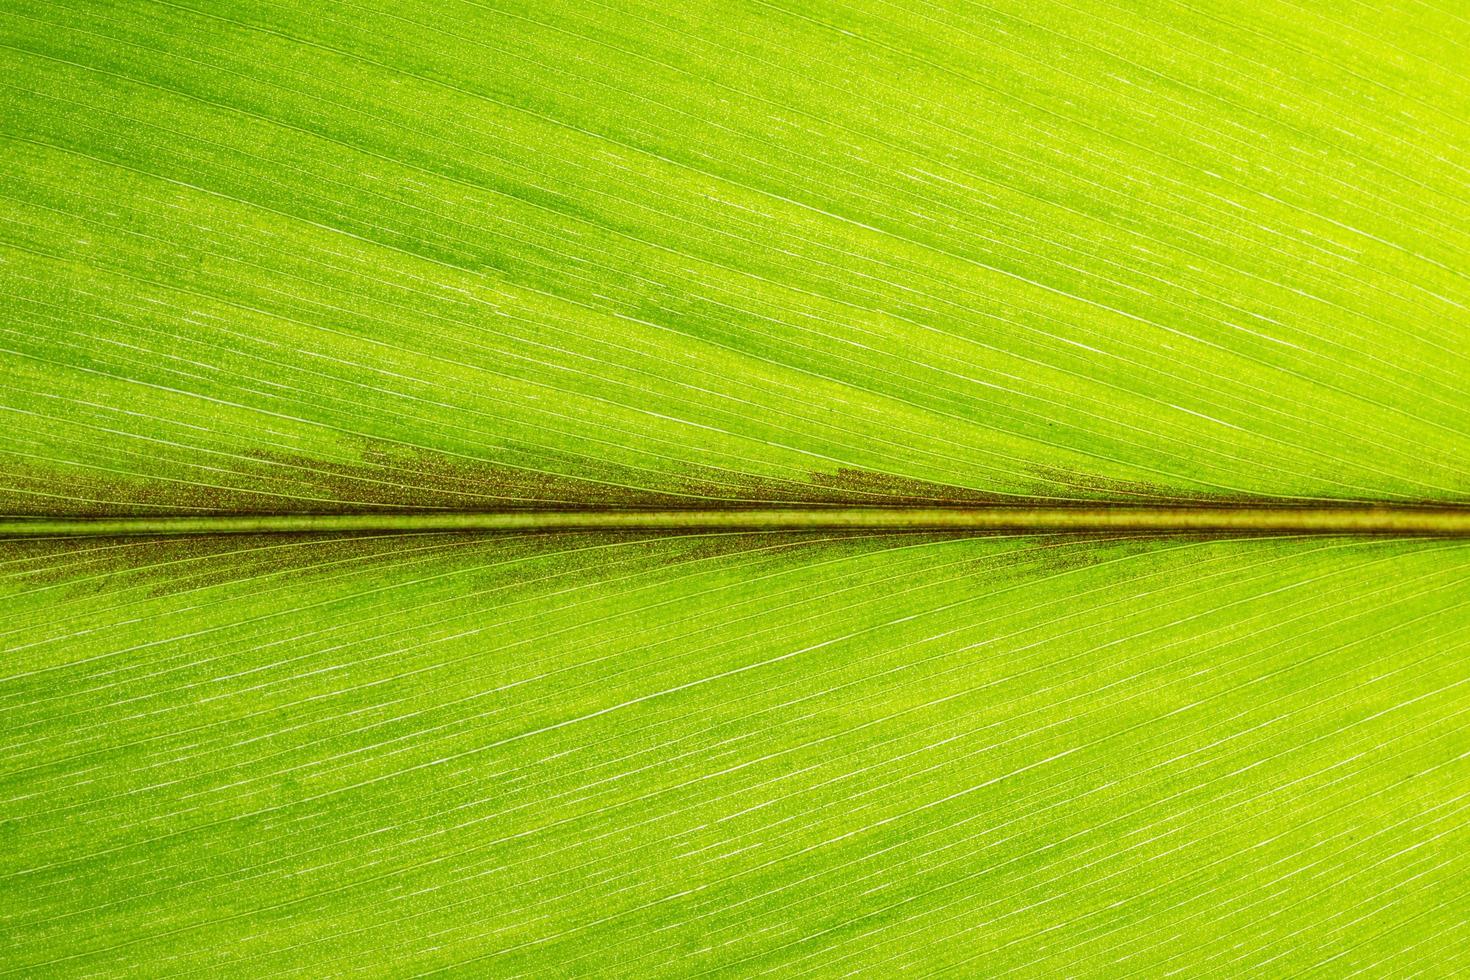 Leaf pattern, close-up photo